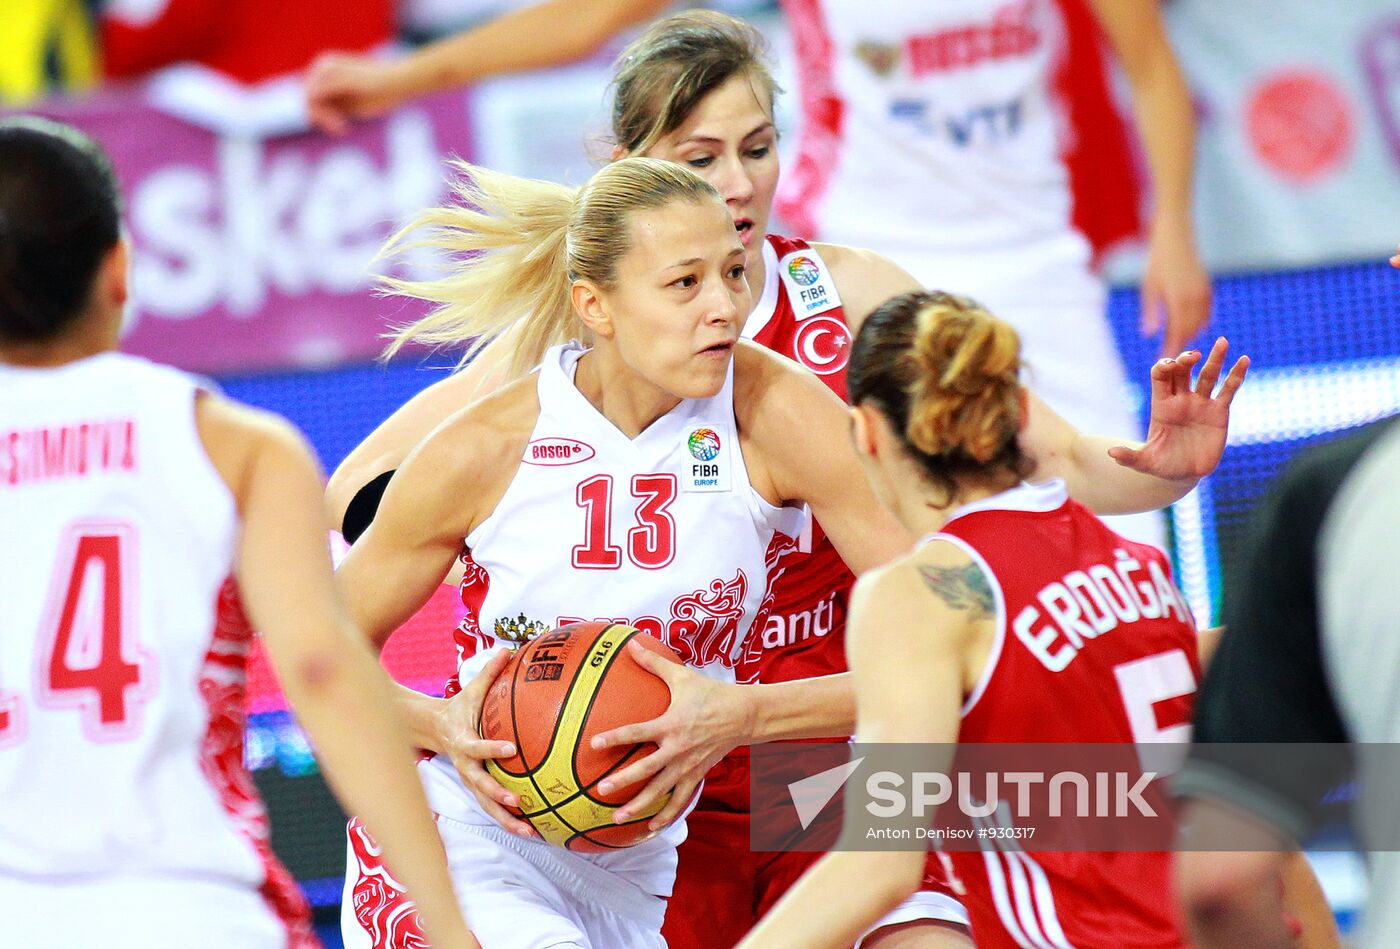 EuroBasket Women 2011 final